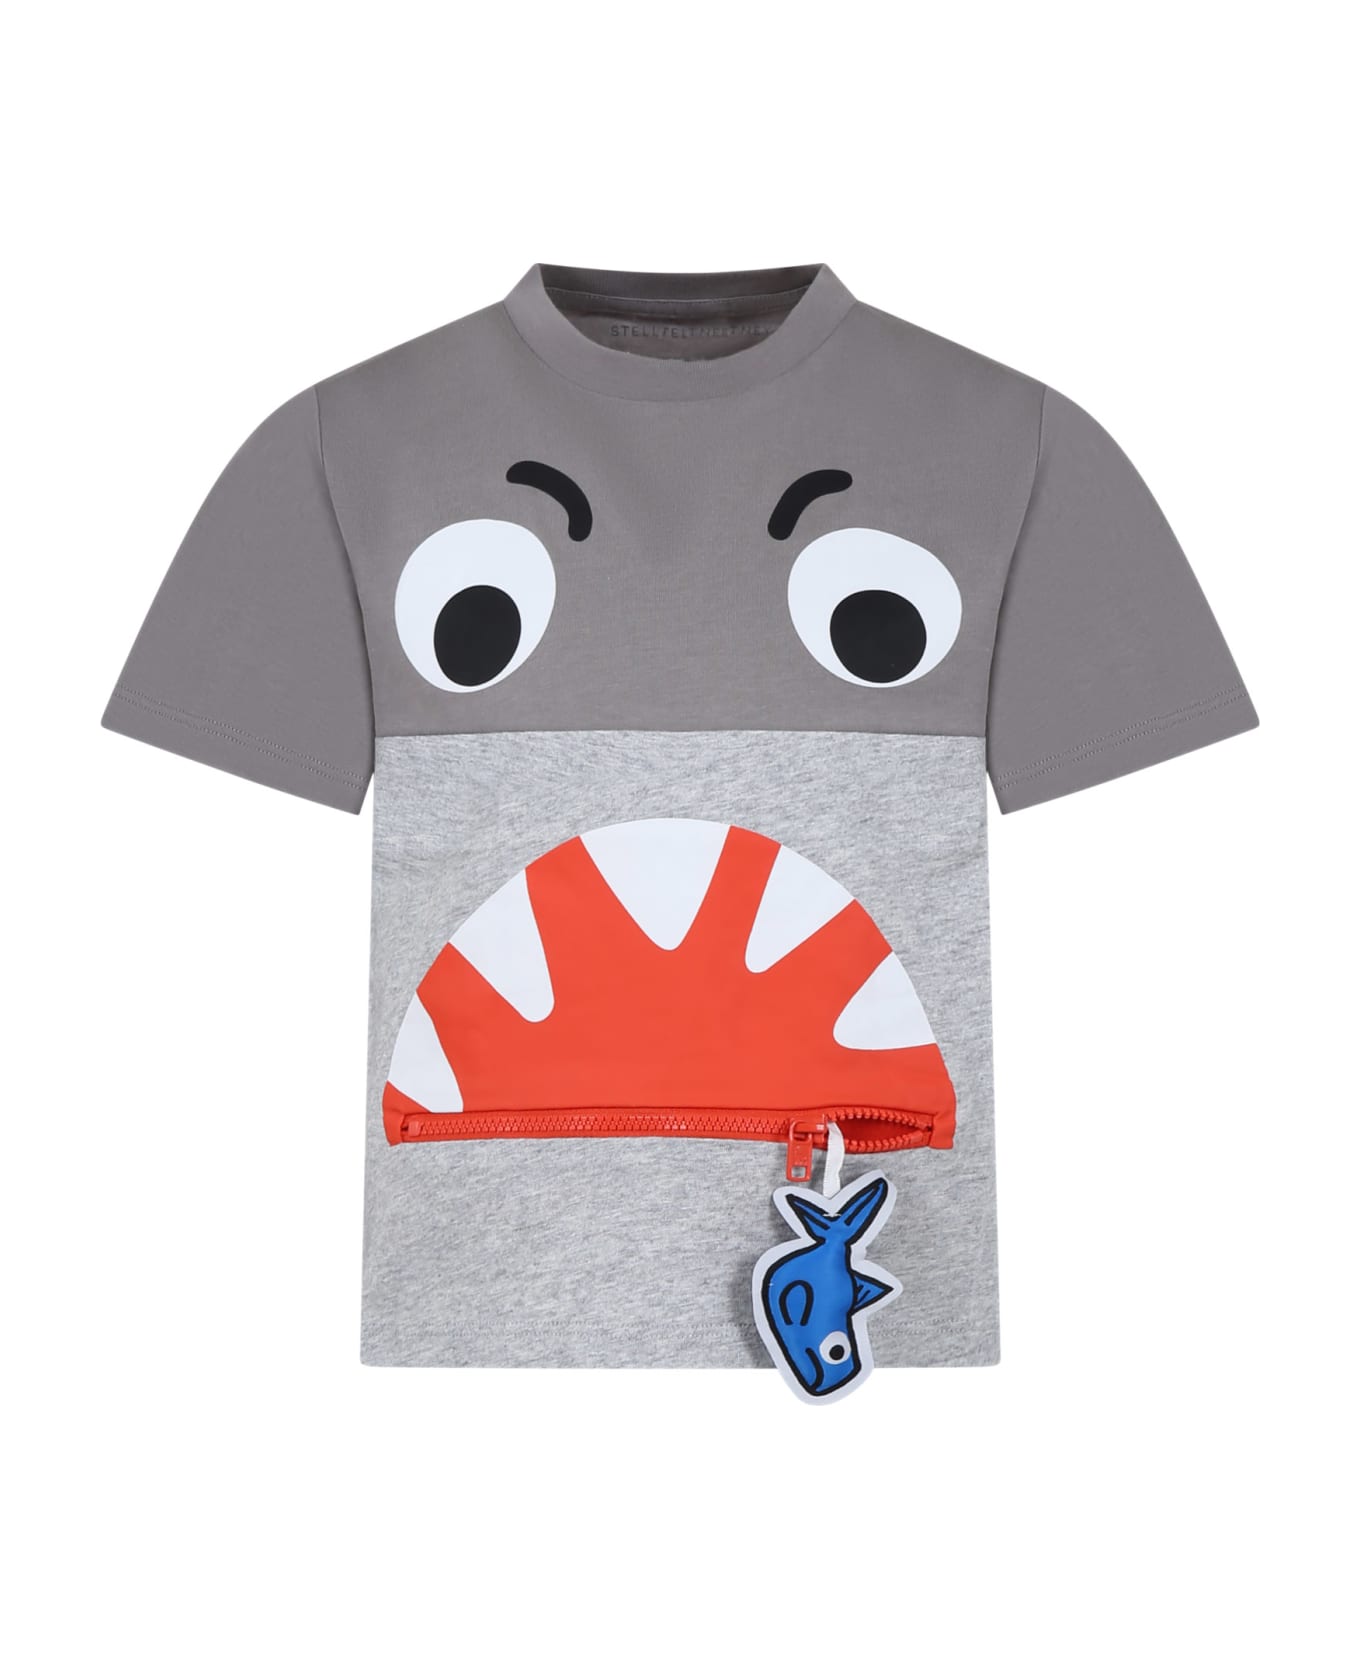 Stella McCartney Kids Gray T-shirt For Boy With Shark - Grey